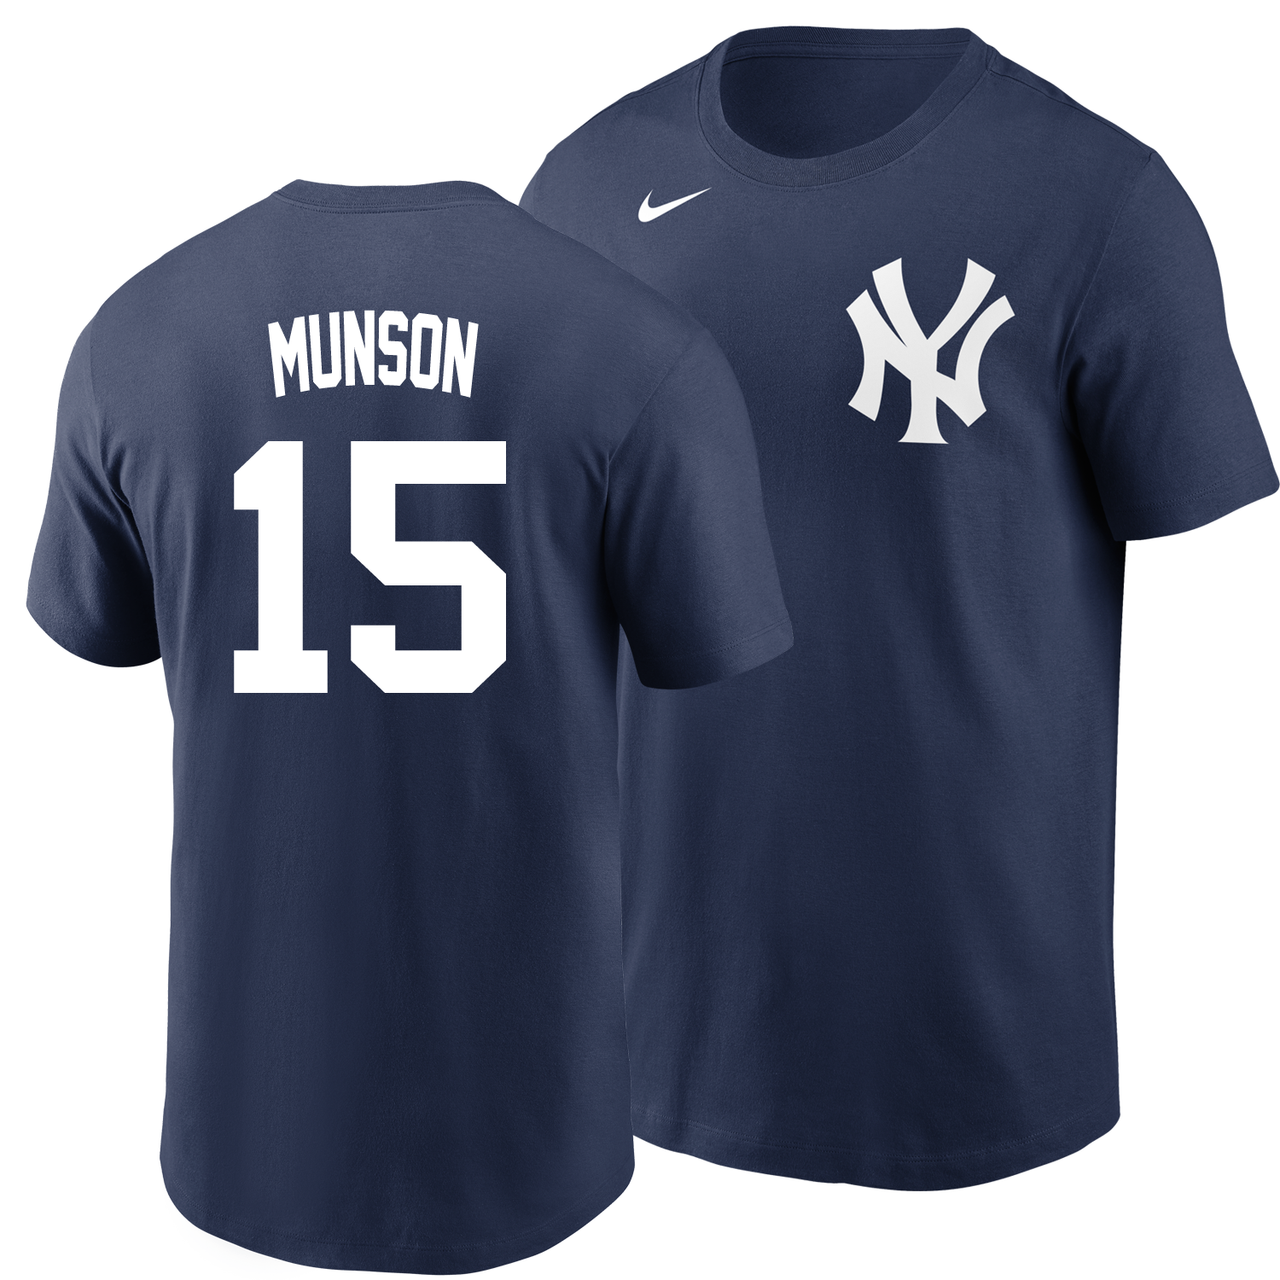 Nike Thurman Munson Jersey - NY Yankees Pinstripe Cooperstown Throwback Jersey